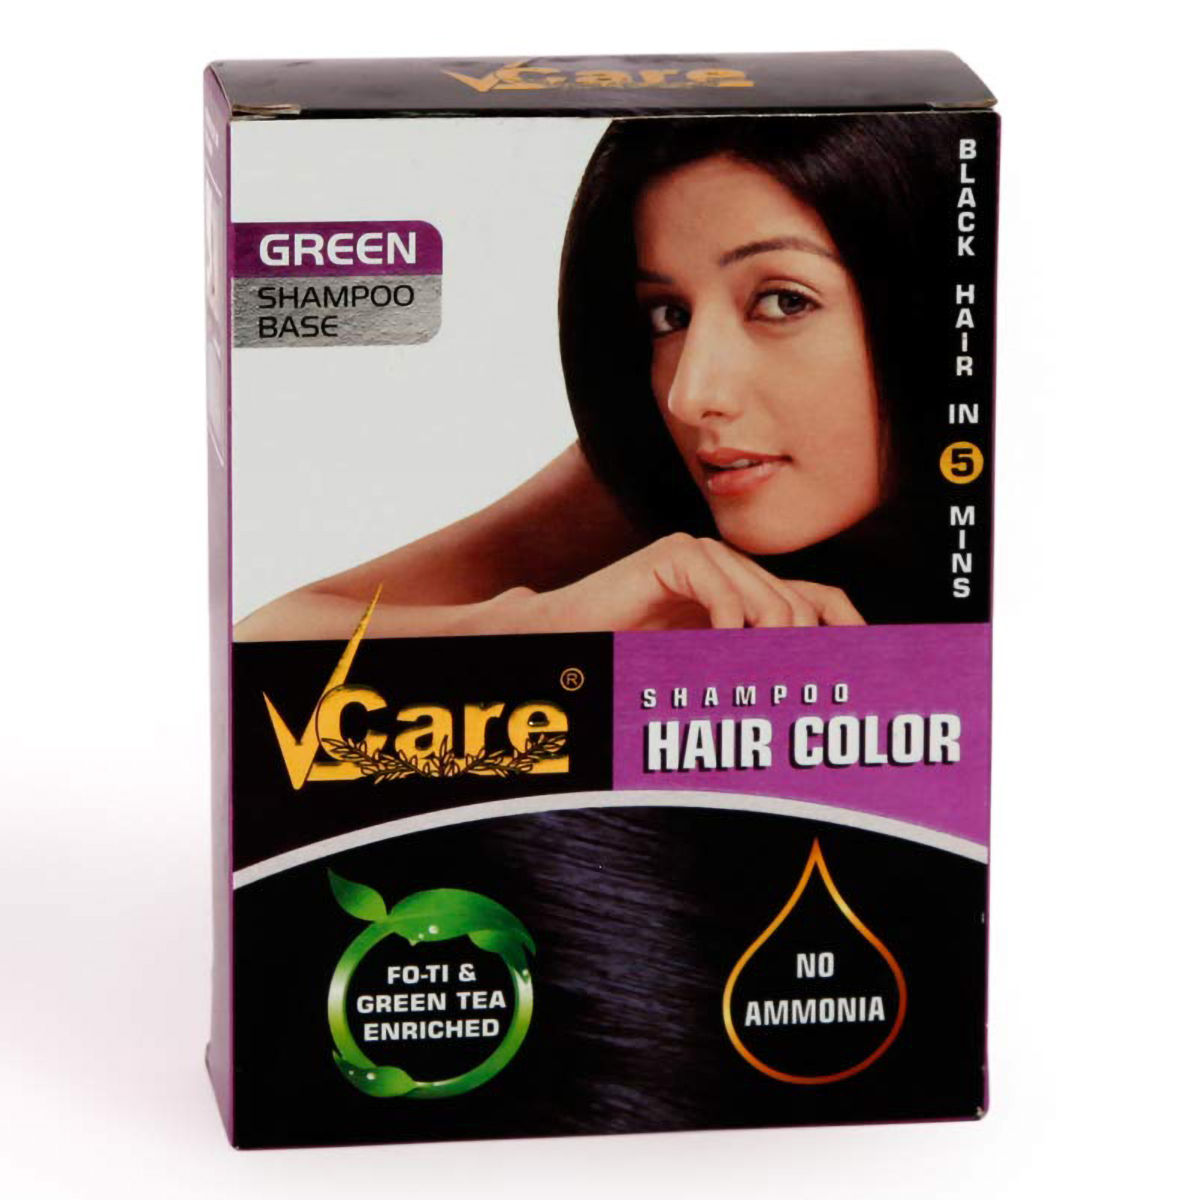 Buy Vcare Premium Hair Tonik - Revives Hair Growth Online at Best Price of  Rs 492 - bigbasket